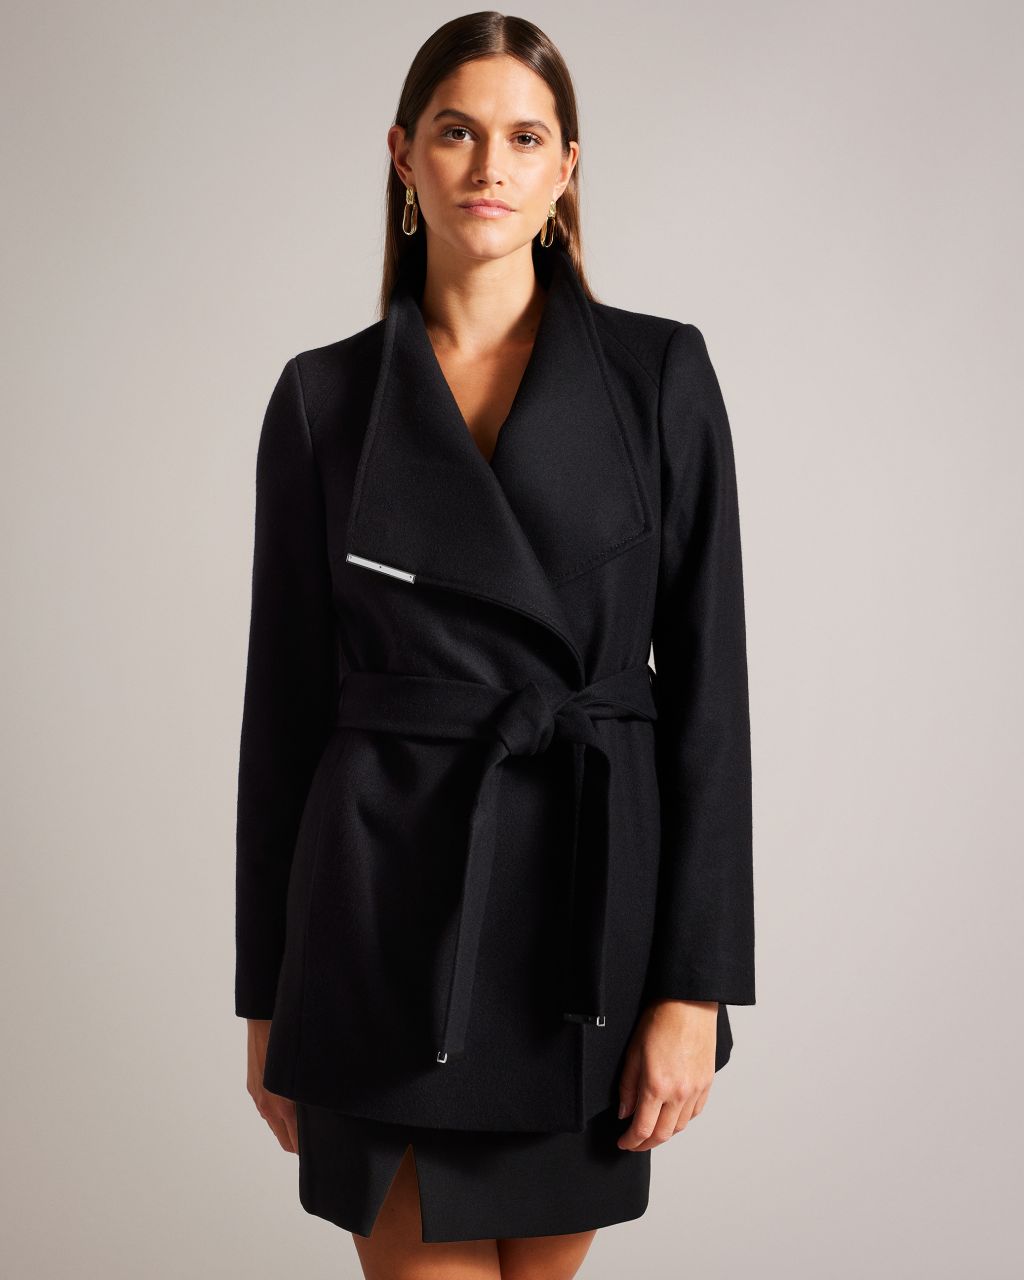 Ted Baker Women's Wool Wrap Short Coat in Black, Rosess